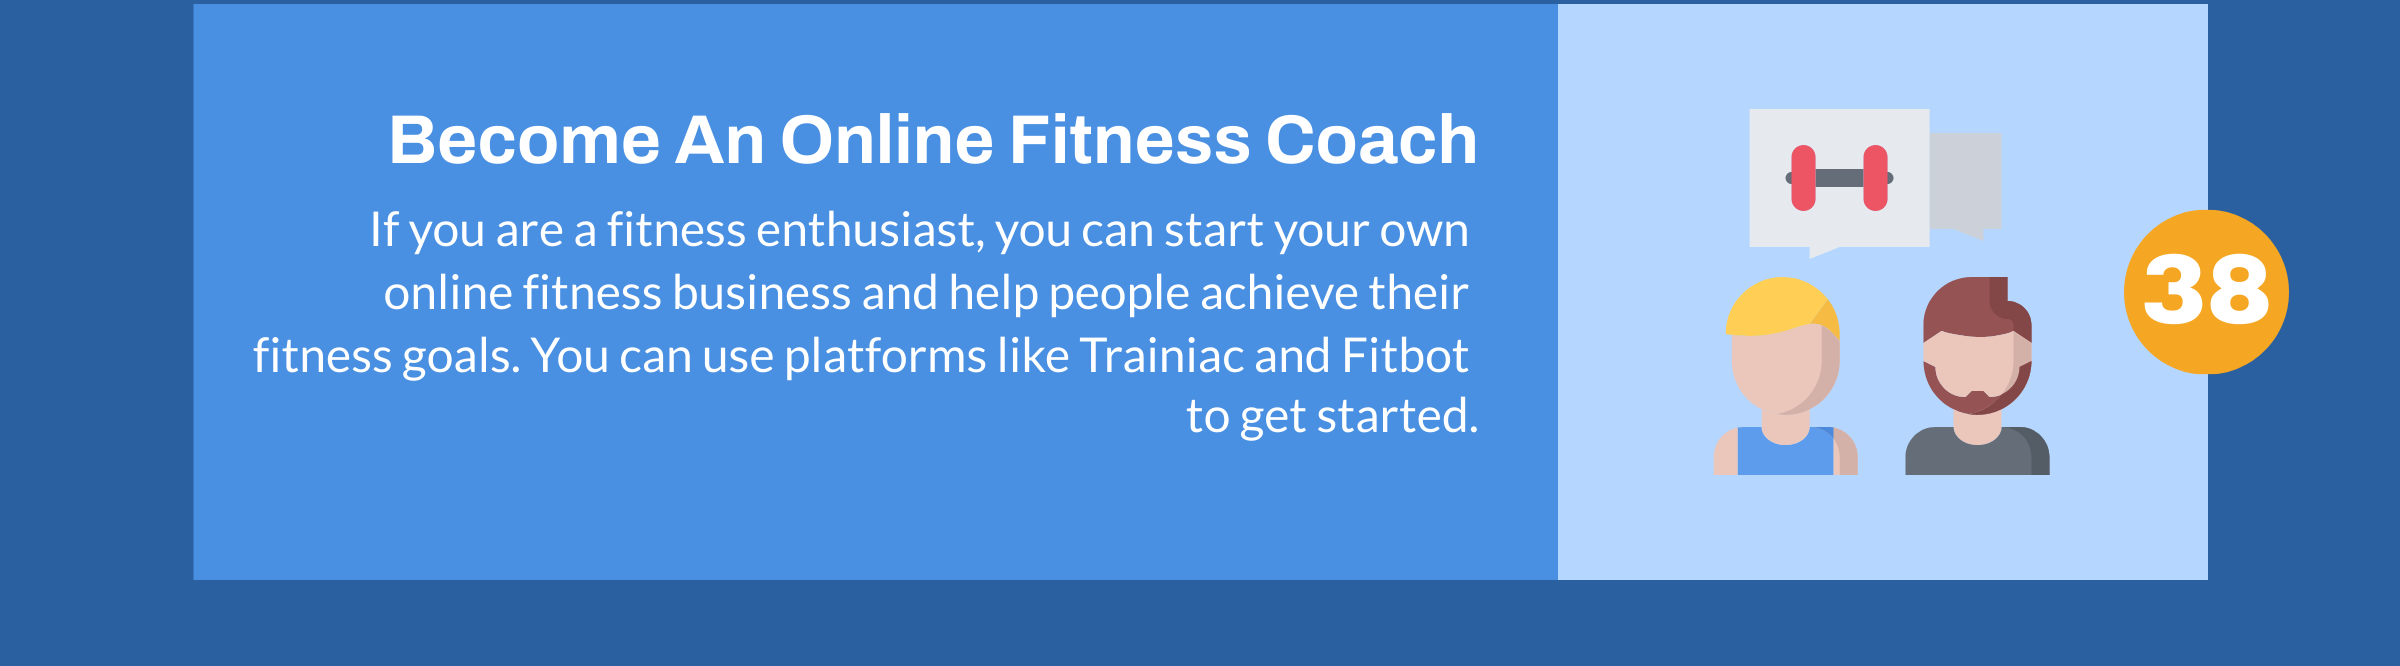 Online fitnesscoach